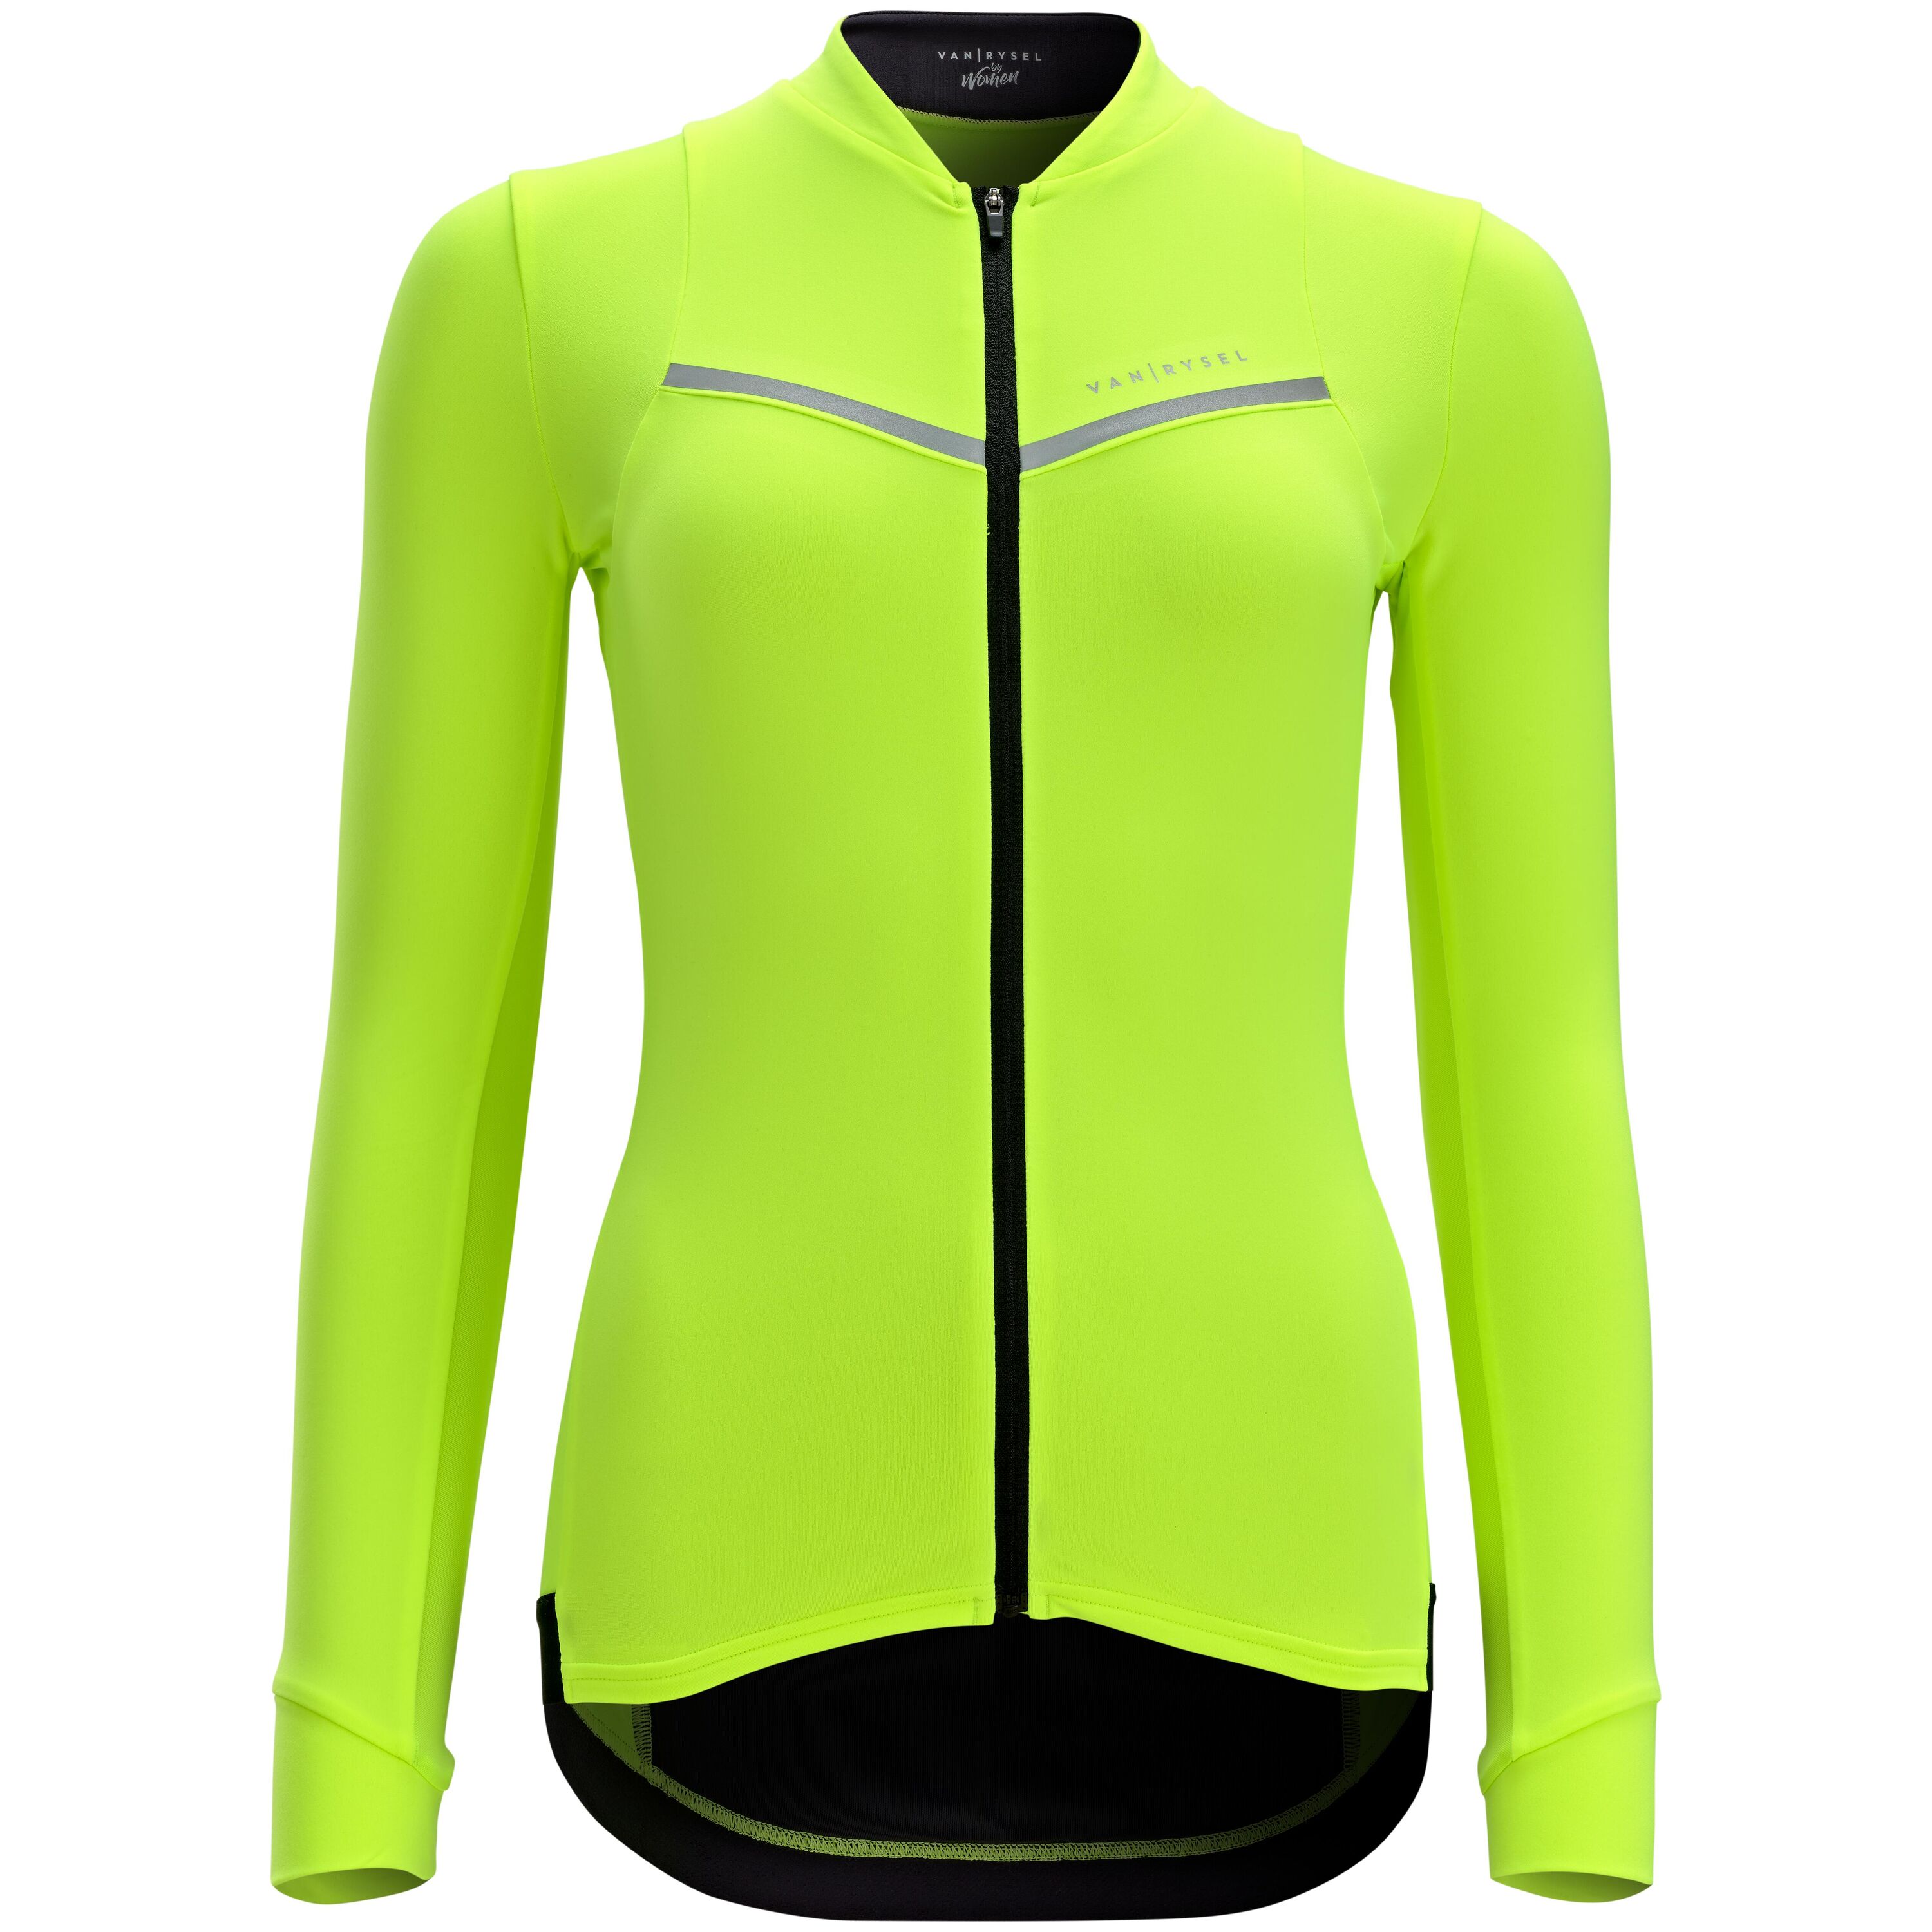 VAN RYSEL Women's Long-Sleeved Road Cycling Jersey - Yellow